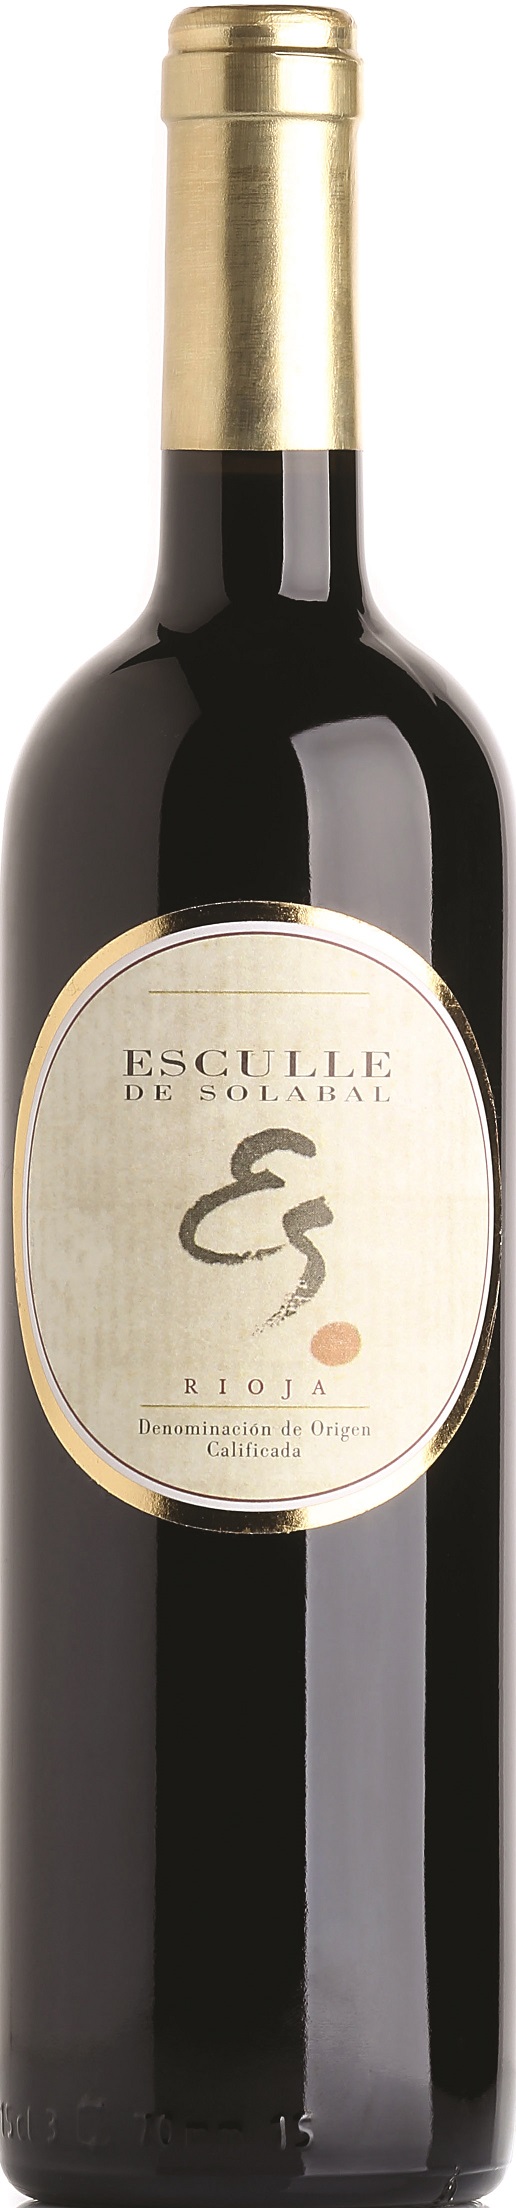 Imagen de la botella de Vino Esculle de Solabal